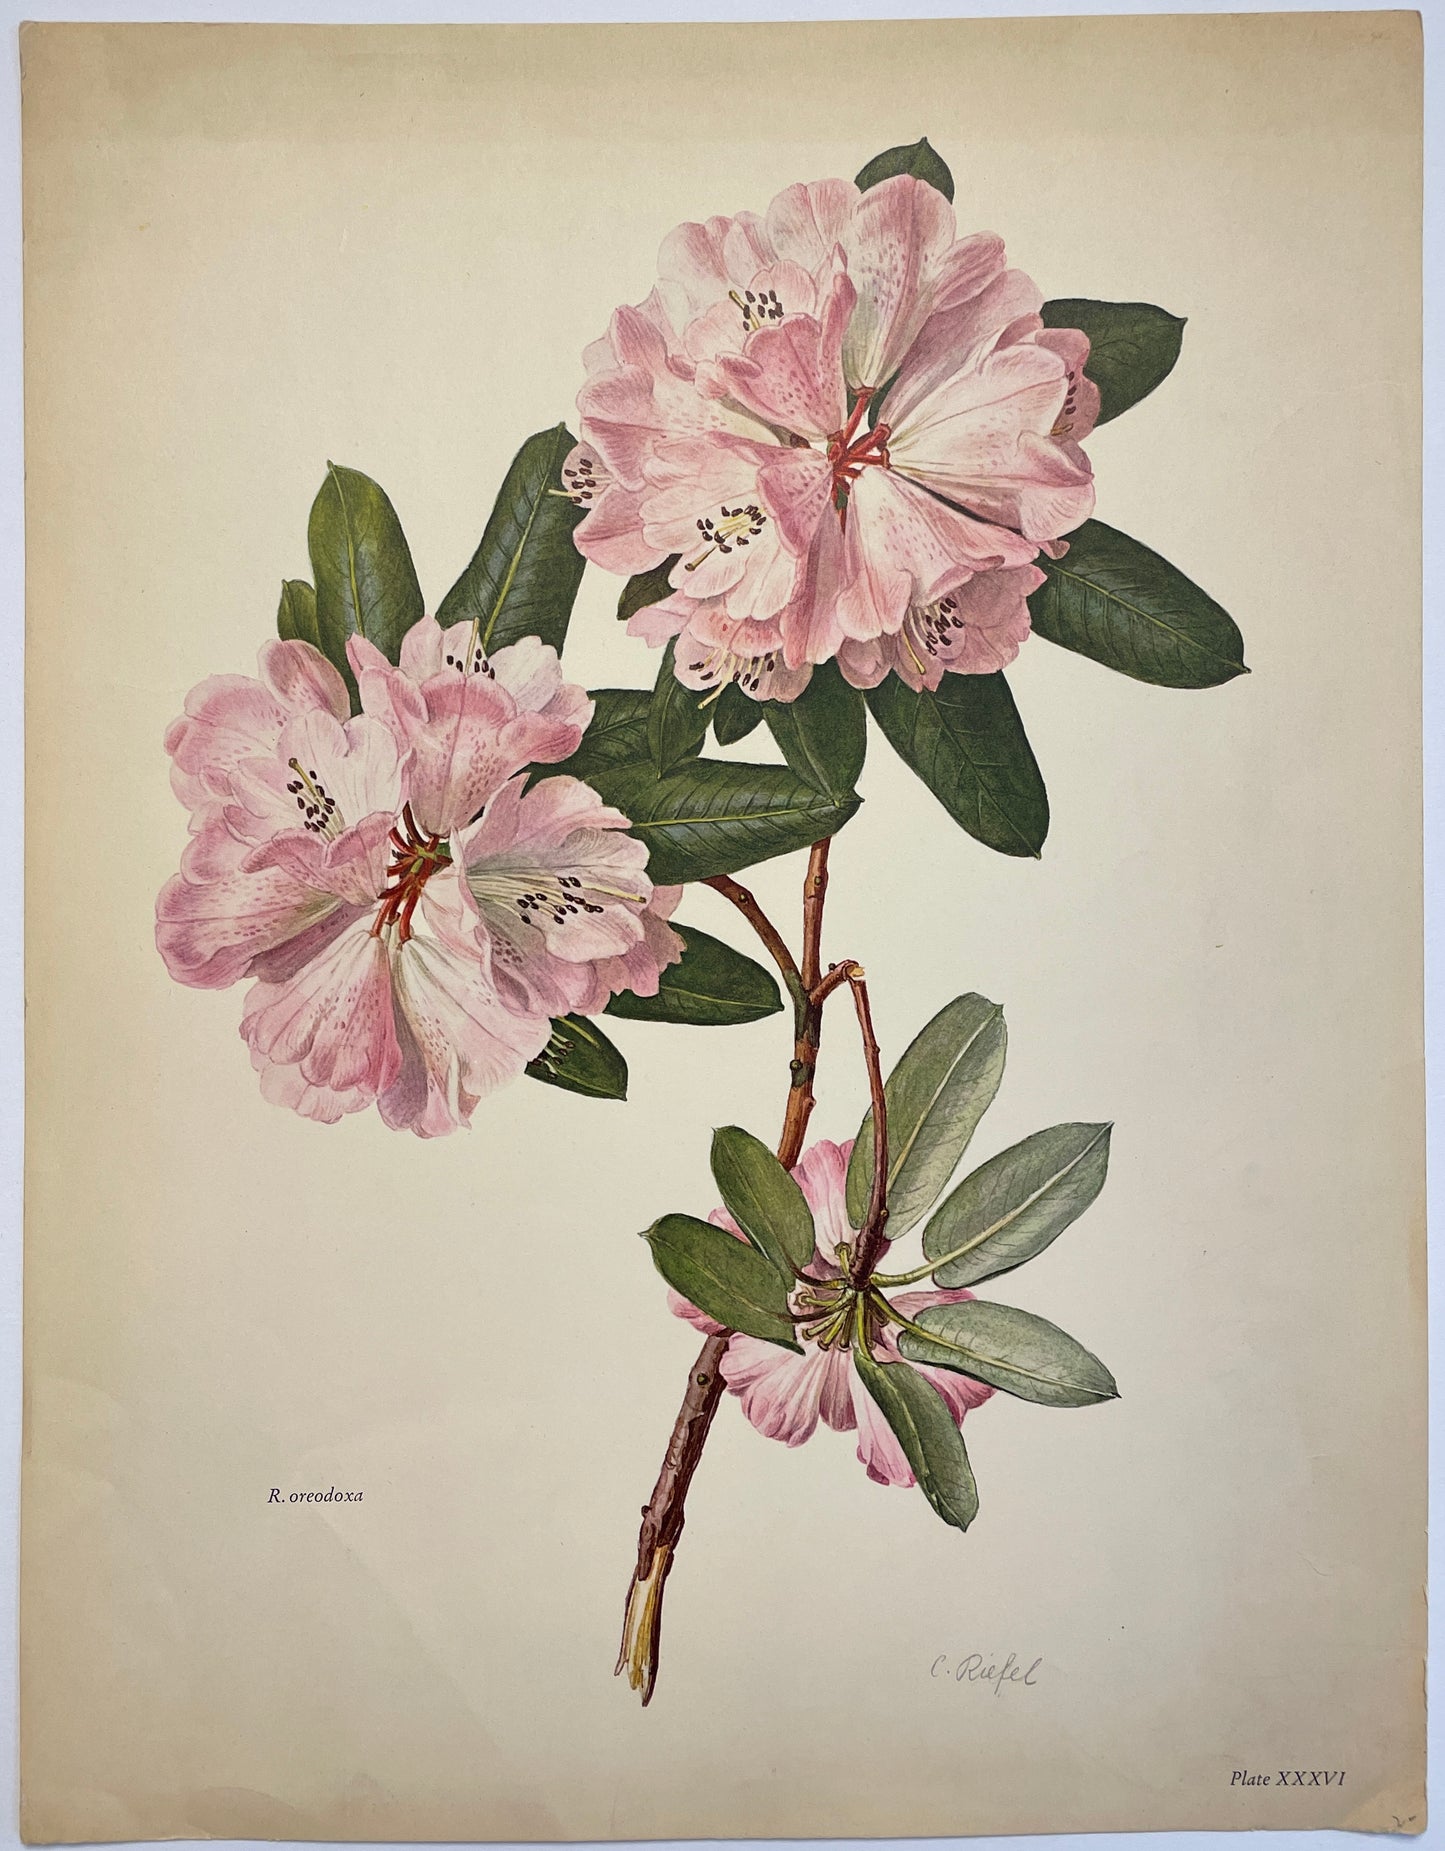 Rhododendron oreodoxa lithograph